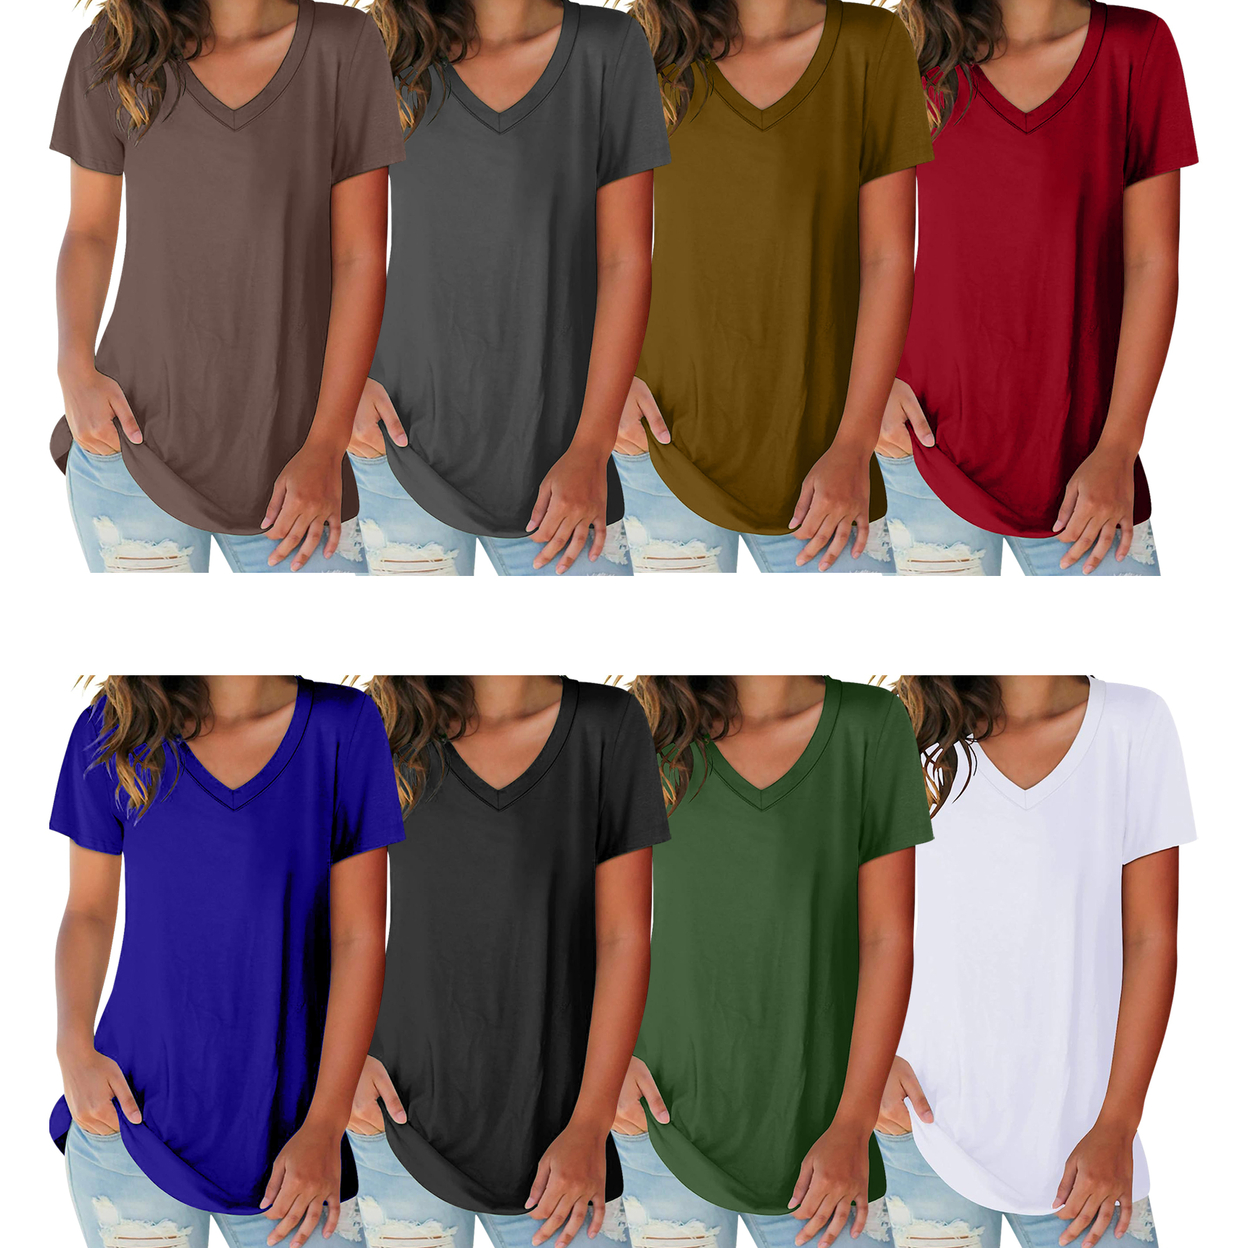 2-Pack: Women's Ultra Soft Smooth Cotton Blend Basic V-Neck Short Sleeve Shirts - Grey & Mustard, X-large